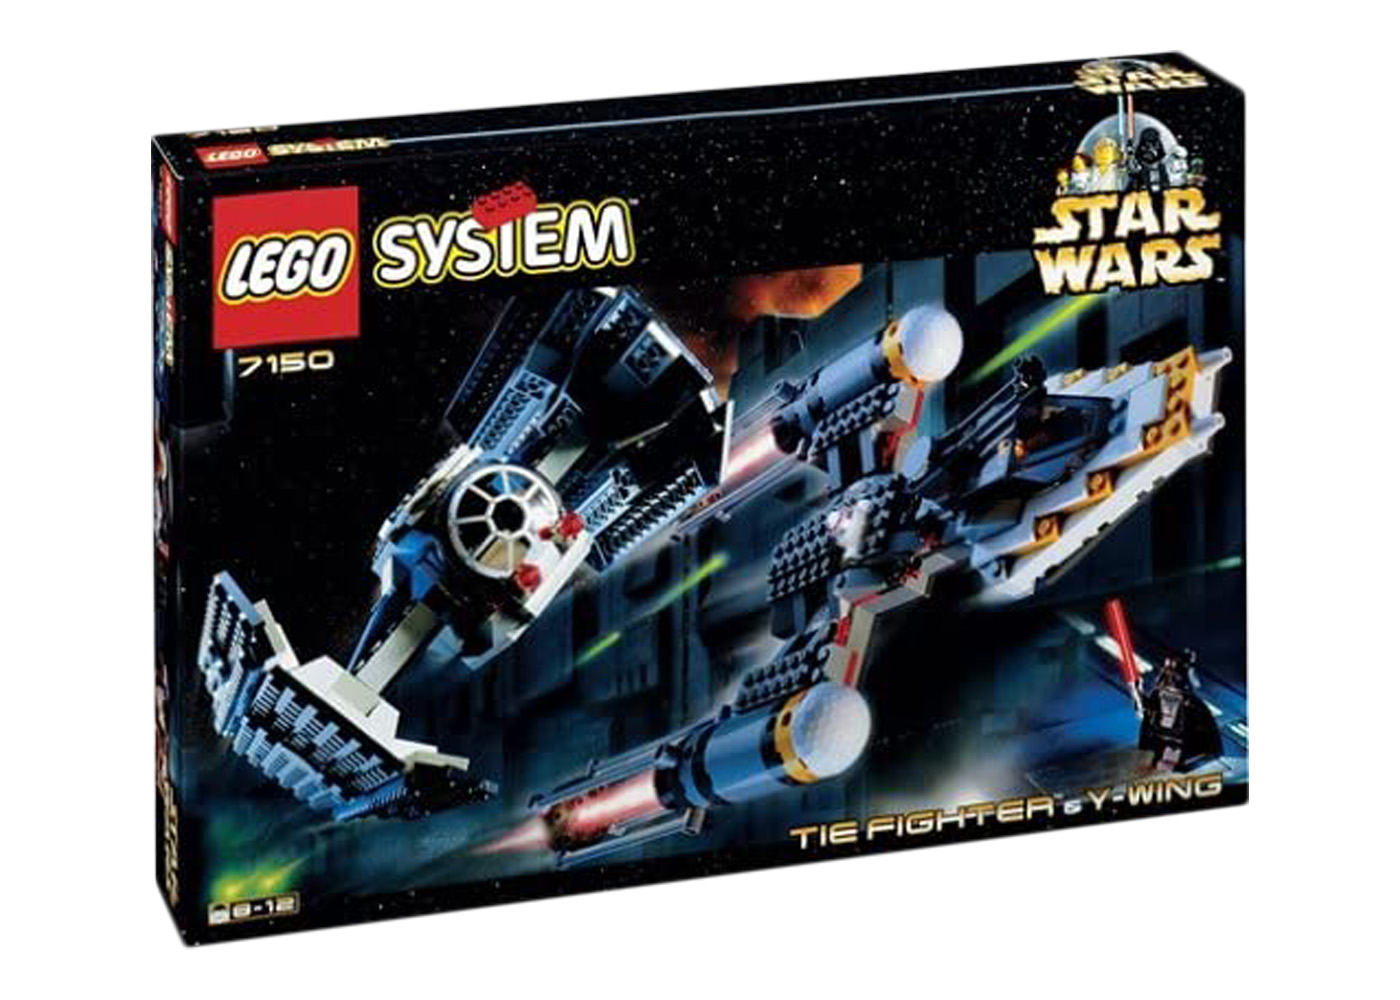 LEGO Star Wars TIE Fighter & Y-wing Set 7150 - US